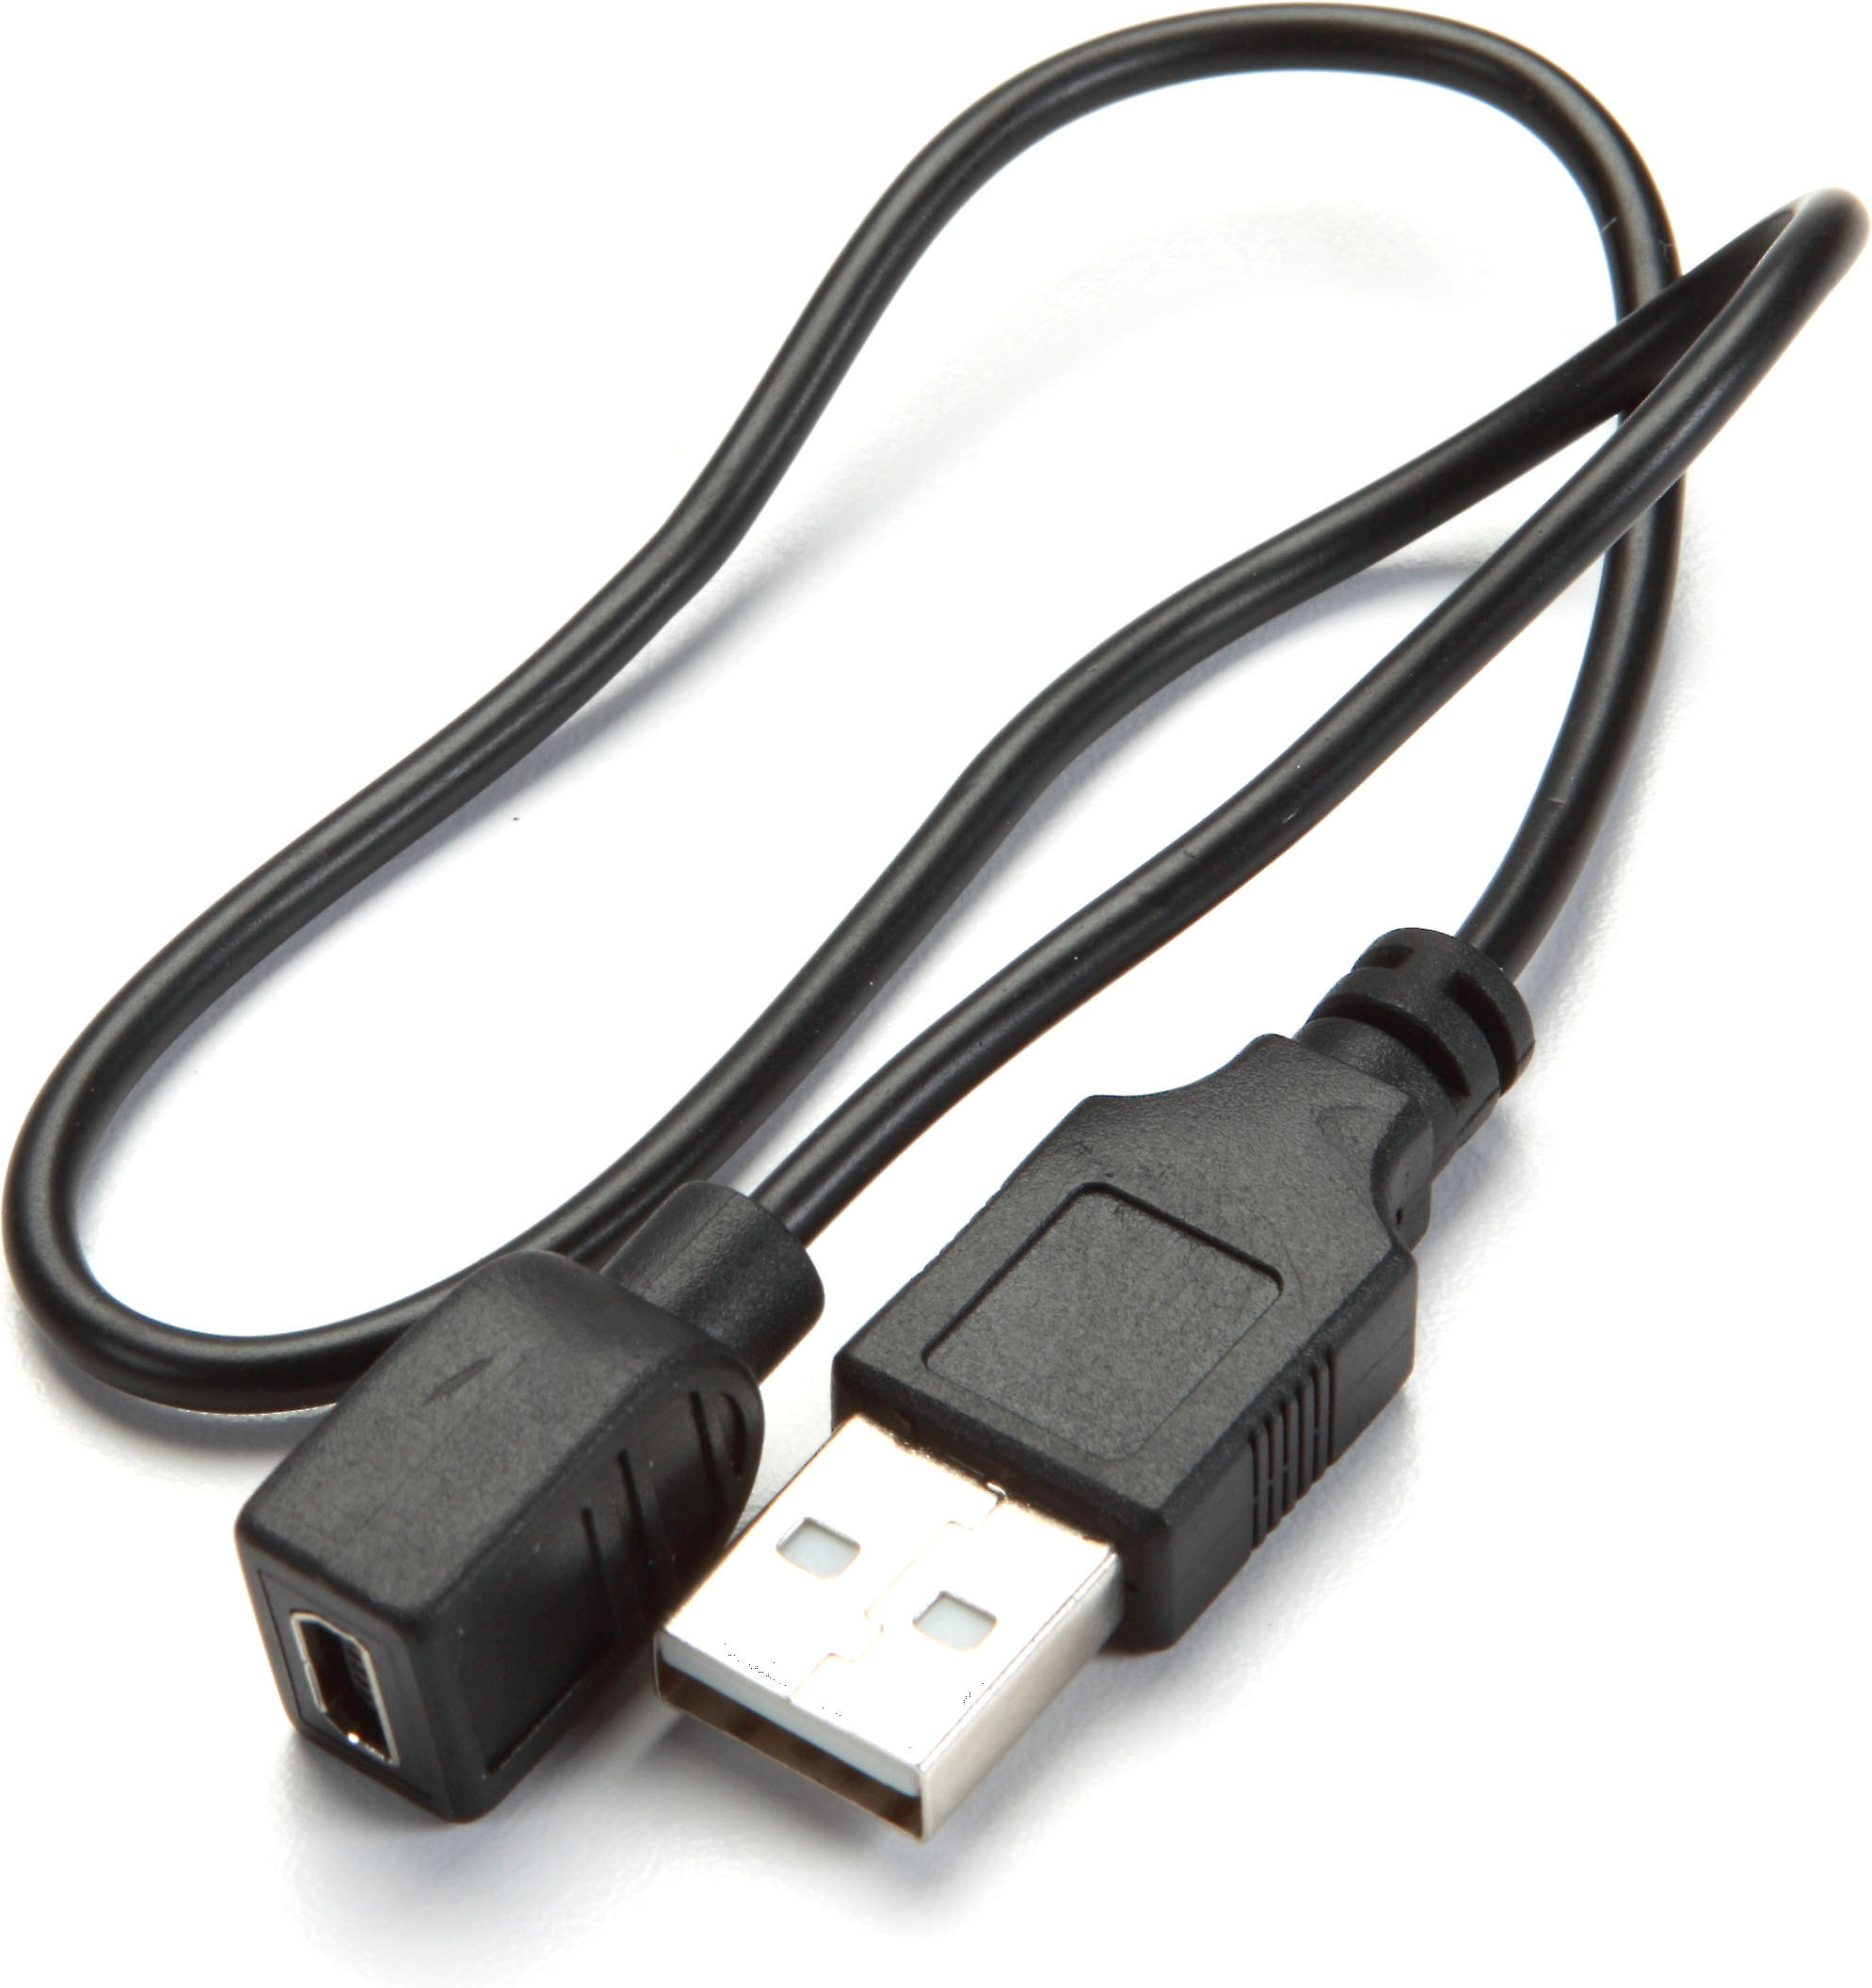 Usb connection. USB connect. USB кабель Nissan. Фабрика USB.